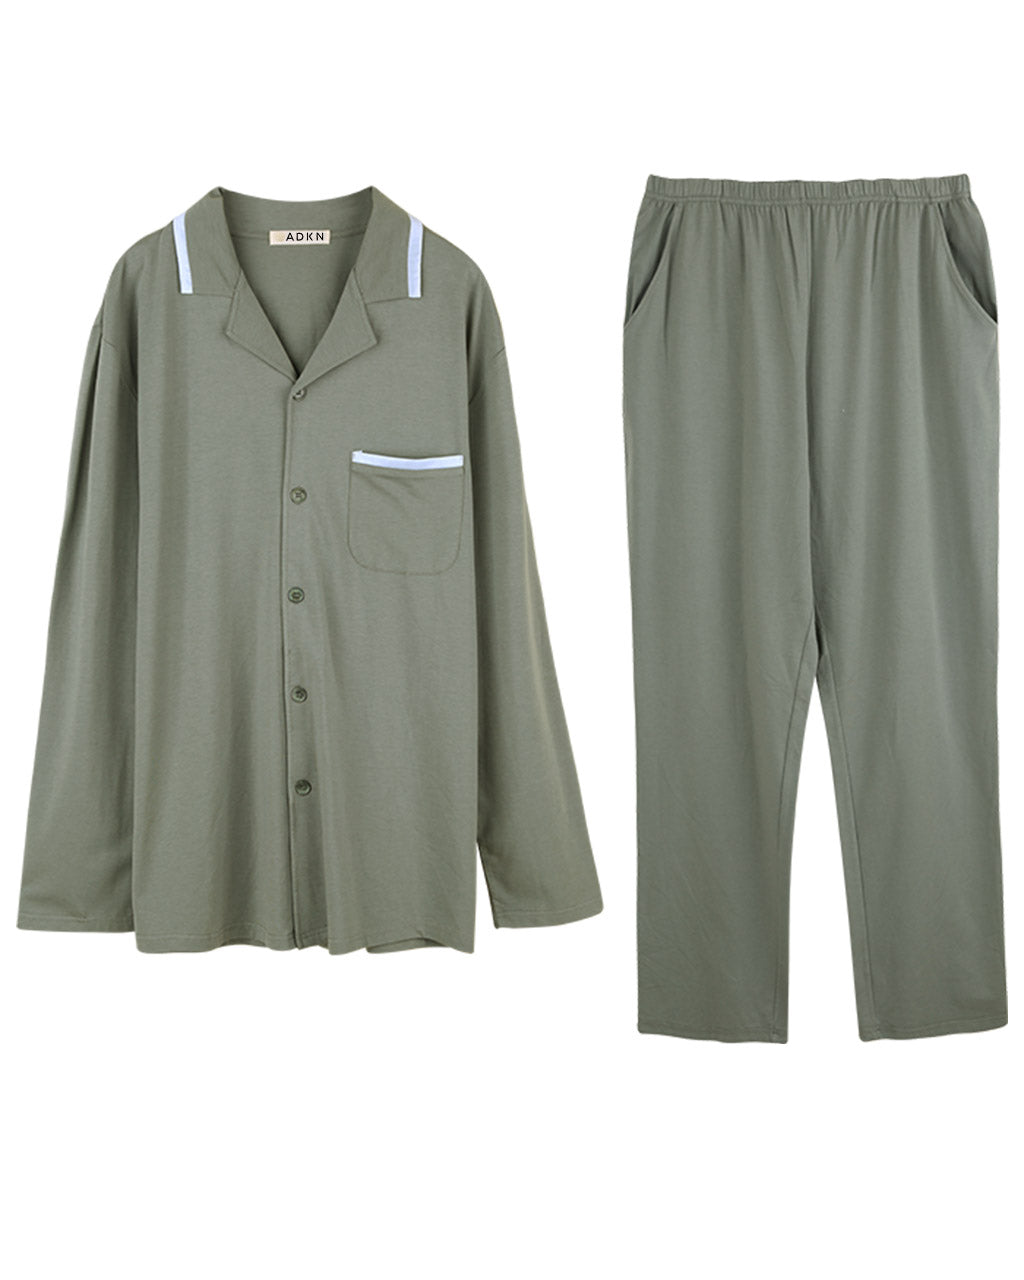 ADKN Mens Khaki Long Sleeve Bamboo Pyjamas - Perfectly Imperfect